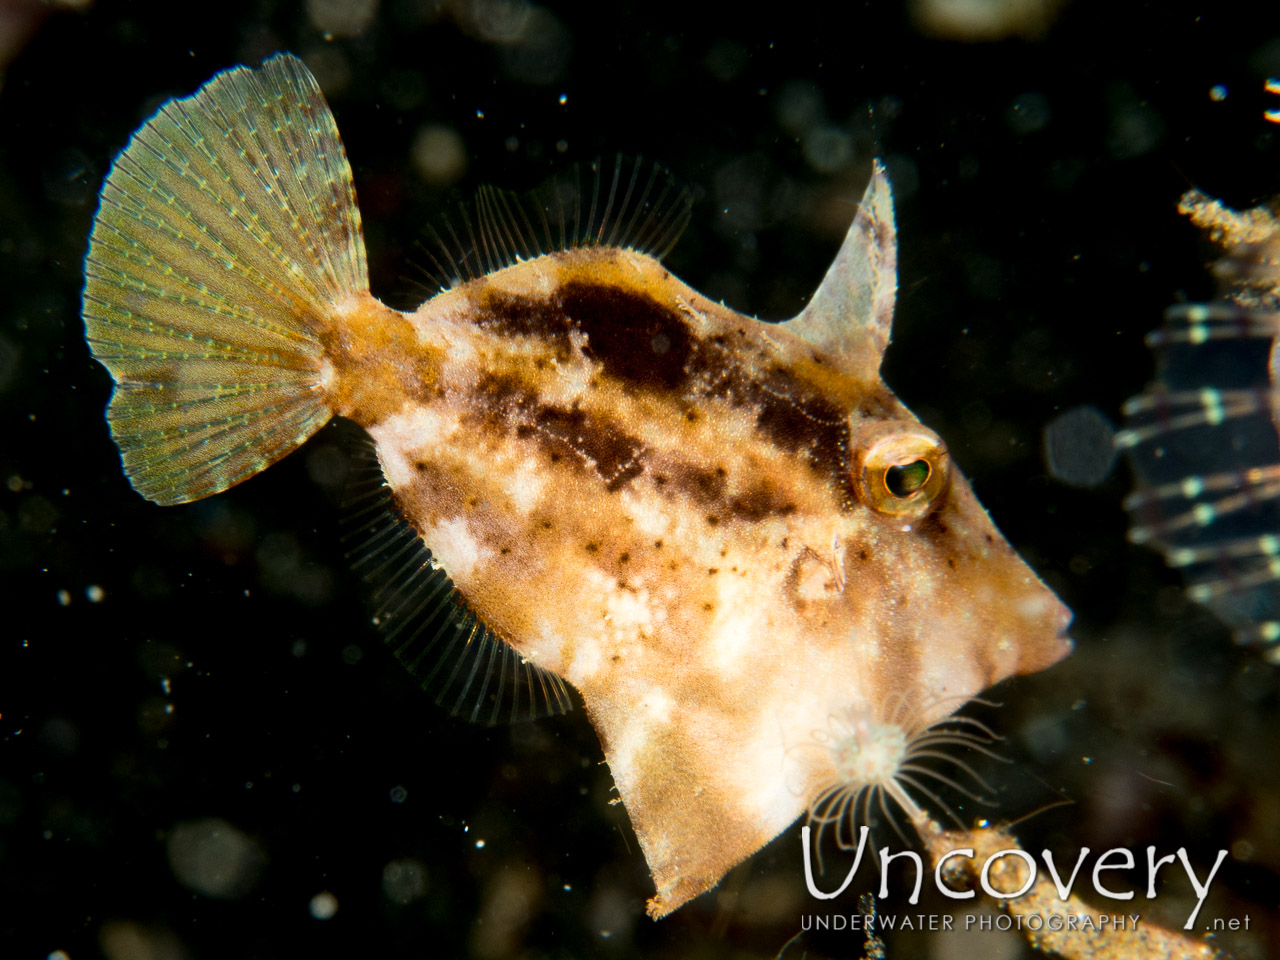 Filefish shot in Indonesia|North Sulawesi|Lembeh Strait|Hairball